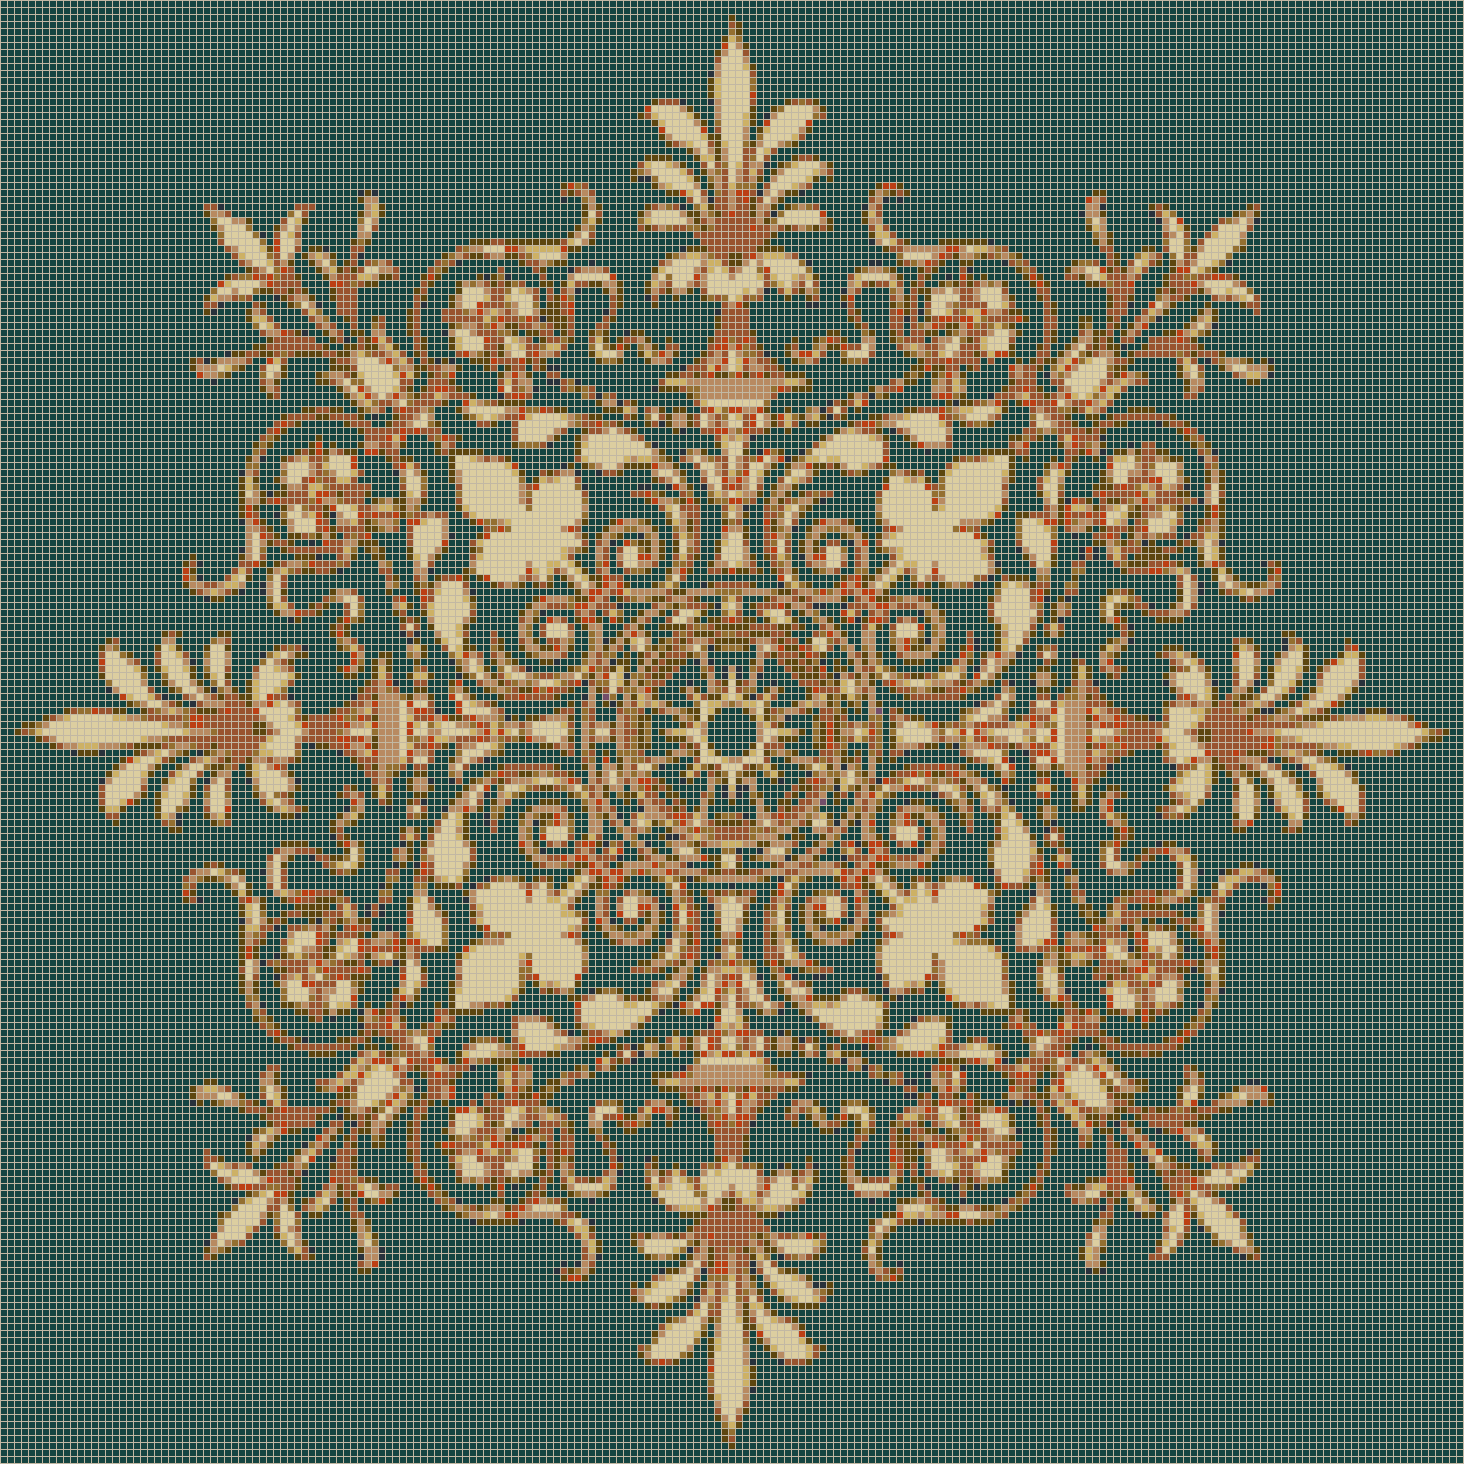 Victorian Ornament (Terra-Brown on D-Marine) - Mosaic Tile Art